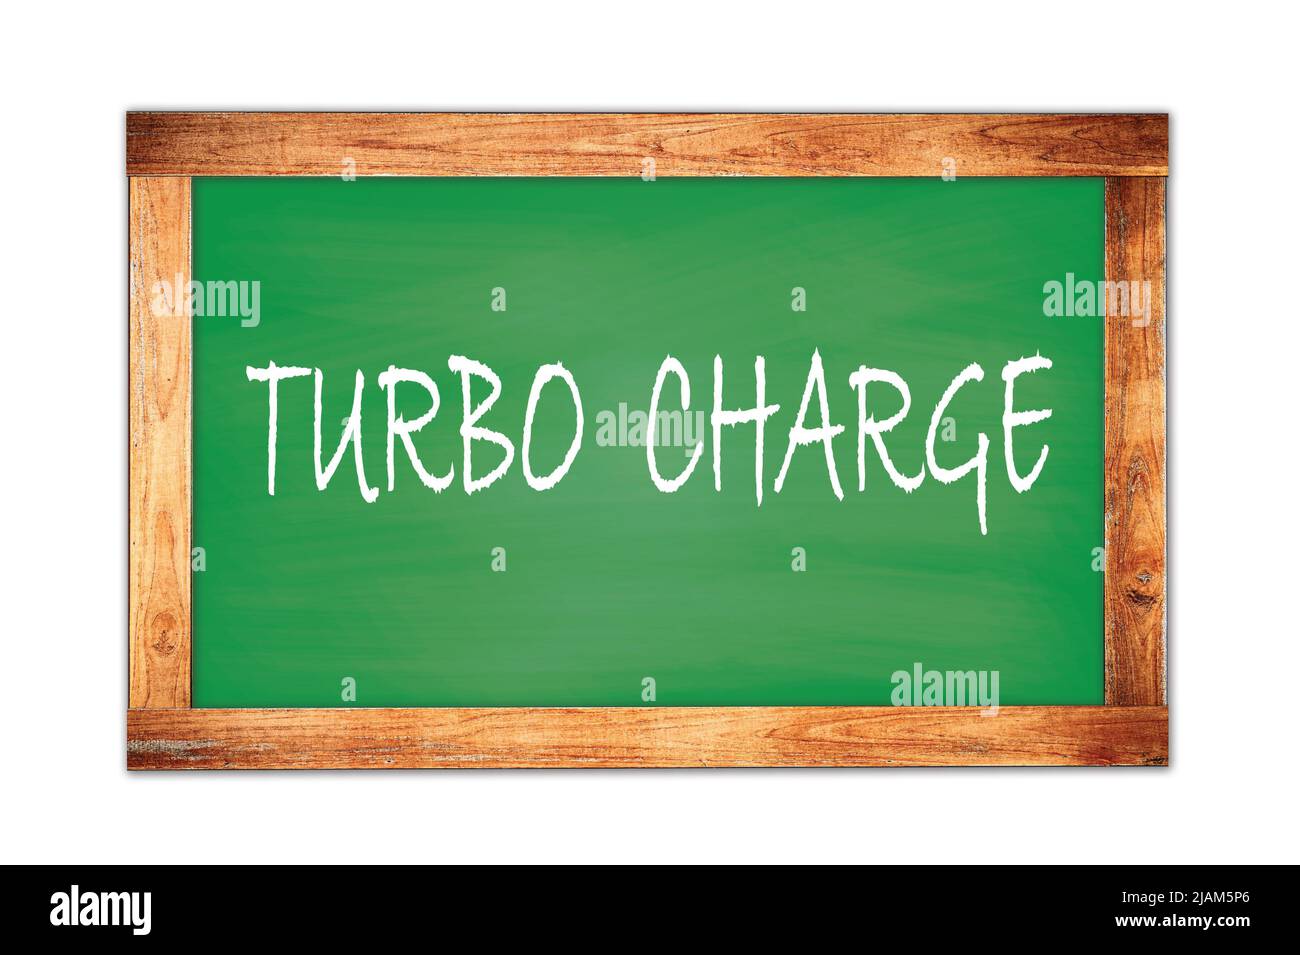 TURBO  CHARGE text written on green wooden frame school blackboard. Stock Photo